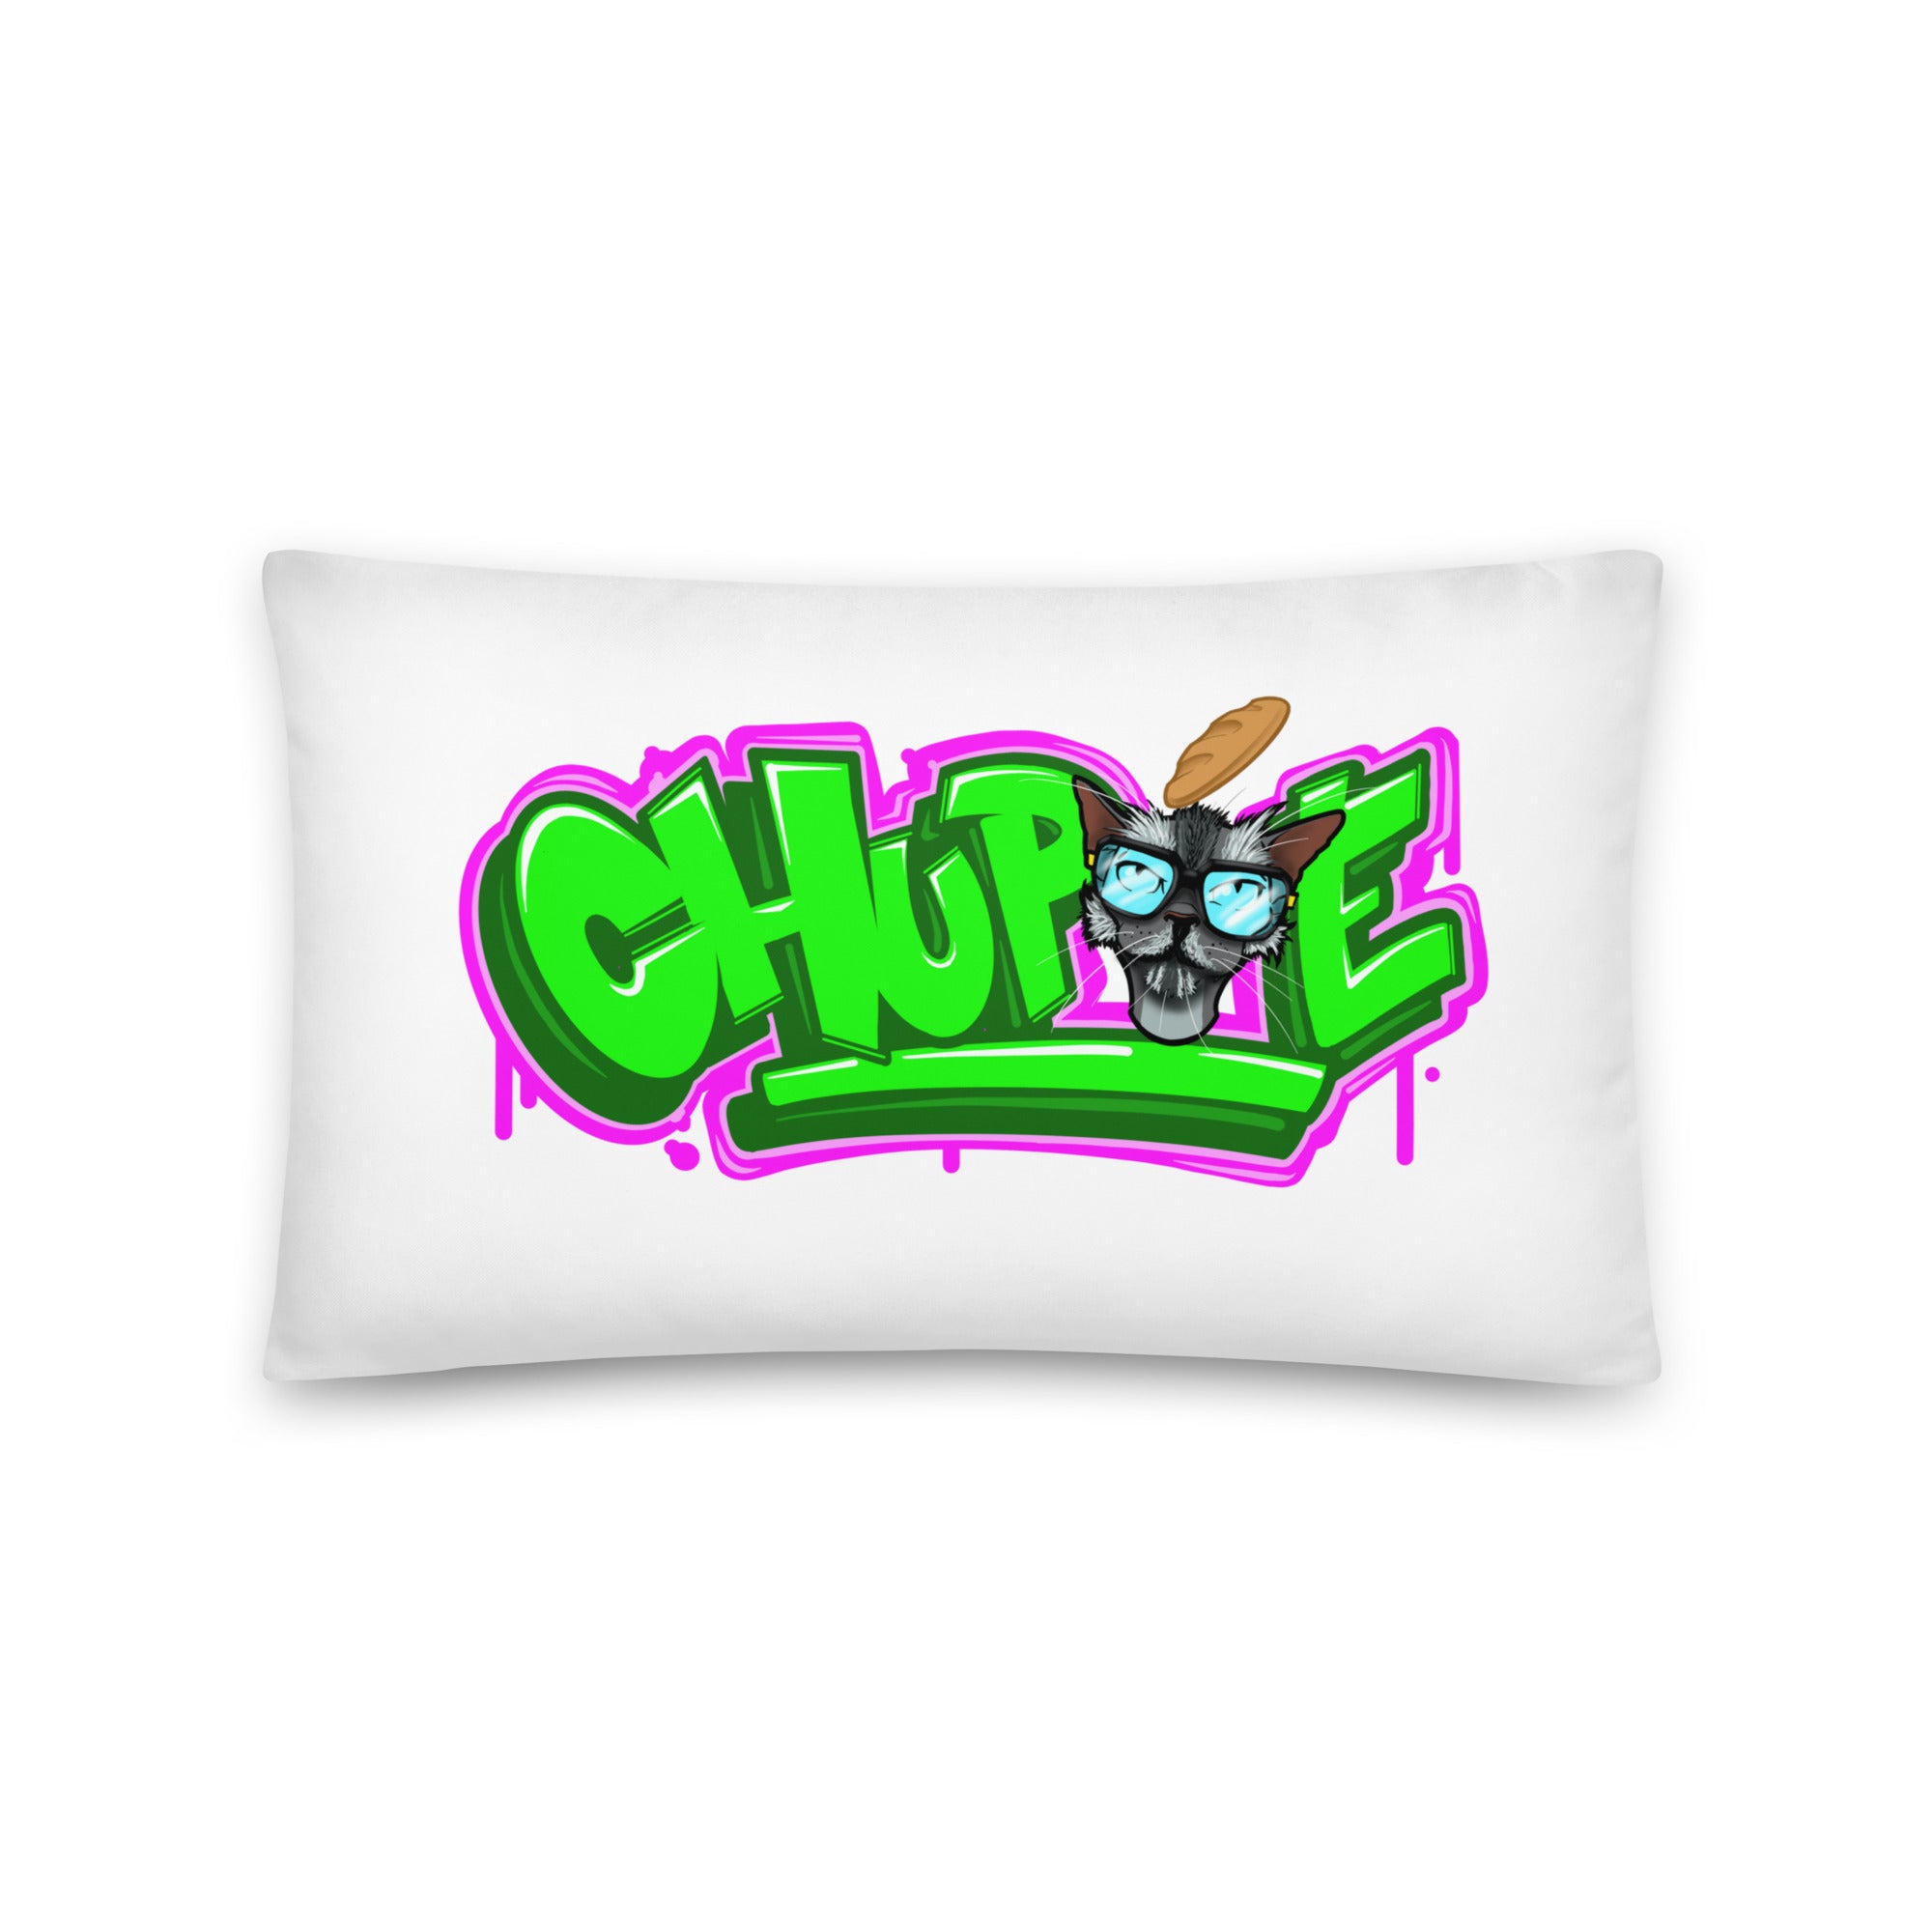 Chupie Graffiti Pillow